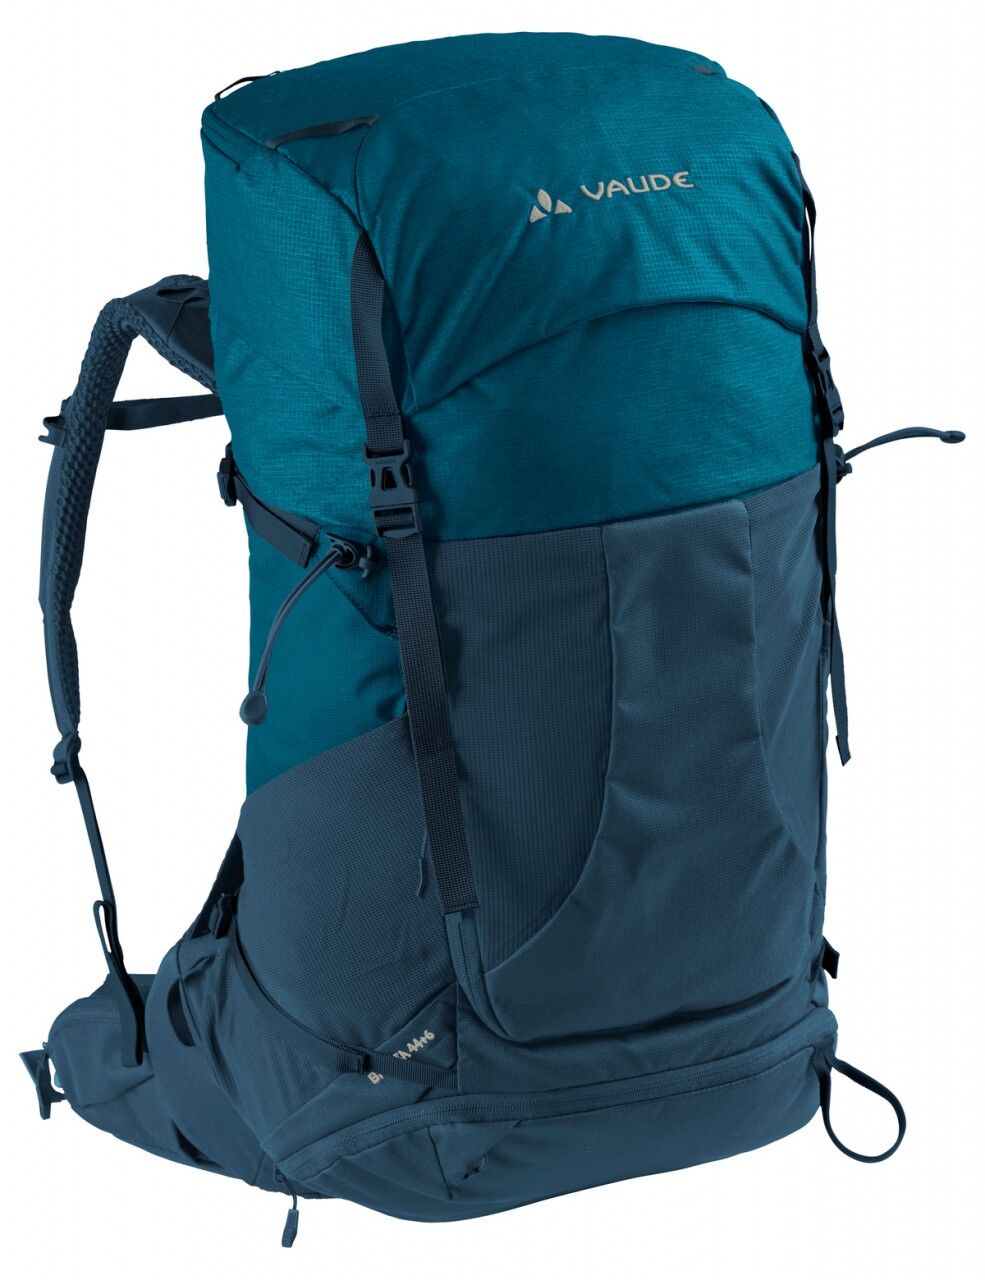 Vaude Brenta 44+6 - Hiking backpack